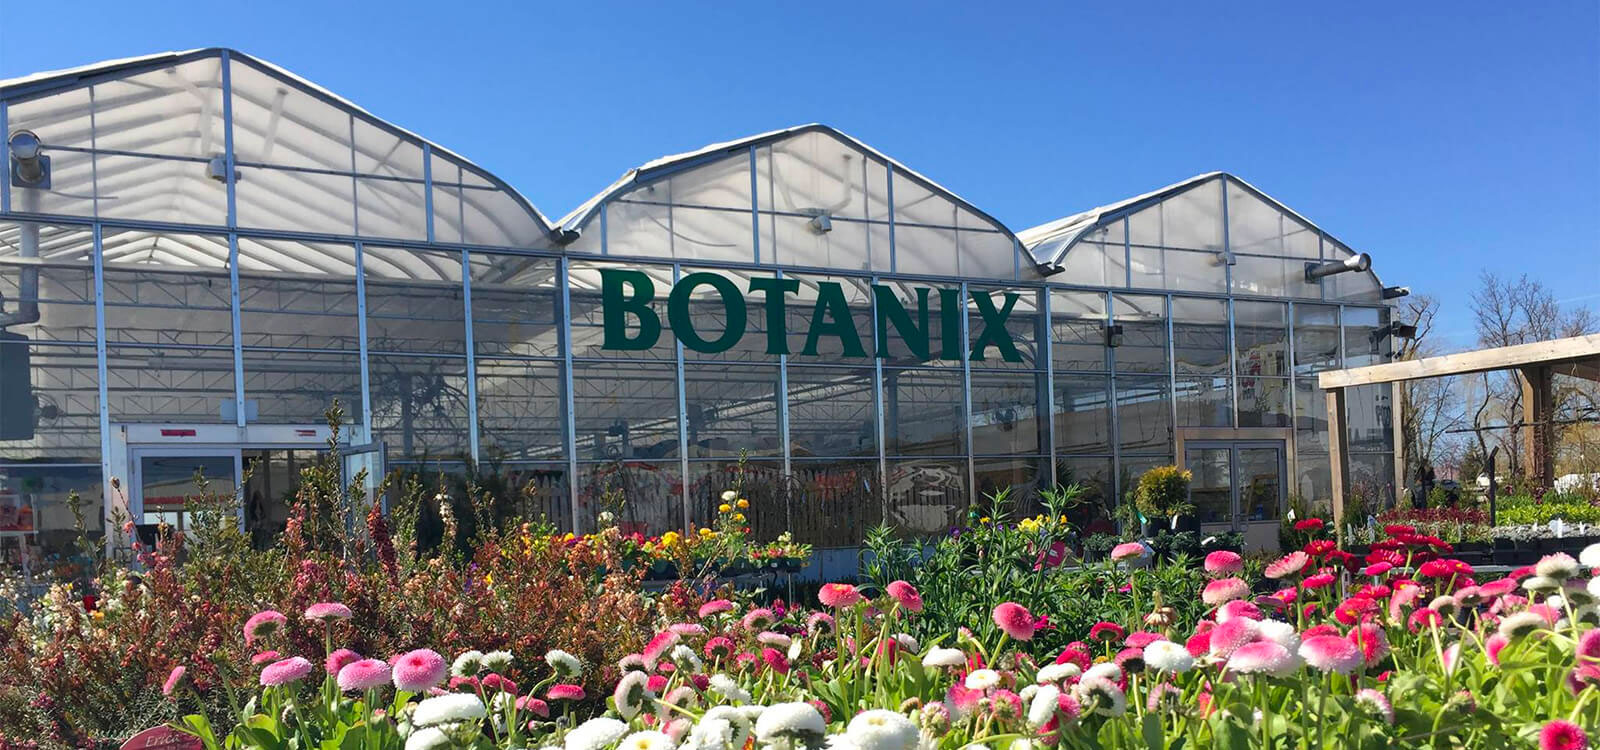 Circulaire Botanix en ligne - Paysagement - Jardinage - Aménagement Paysager